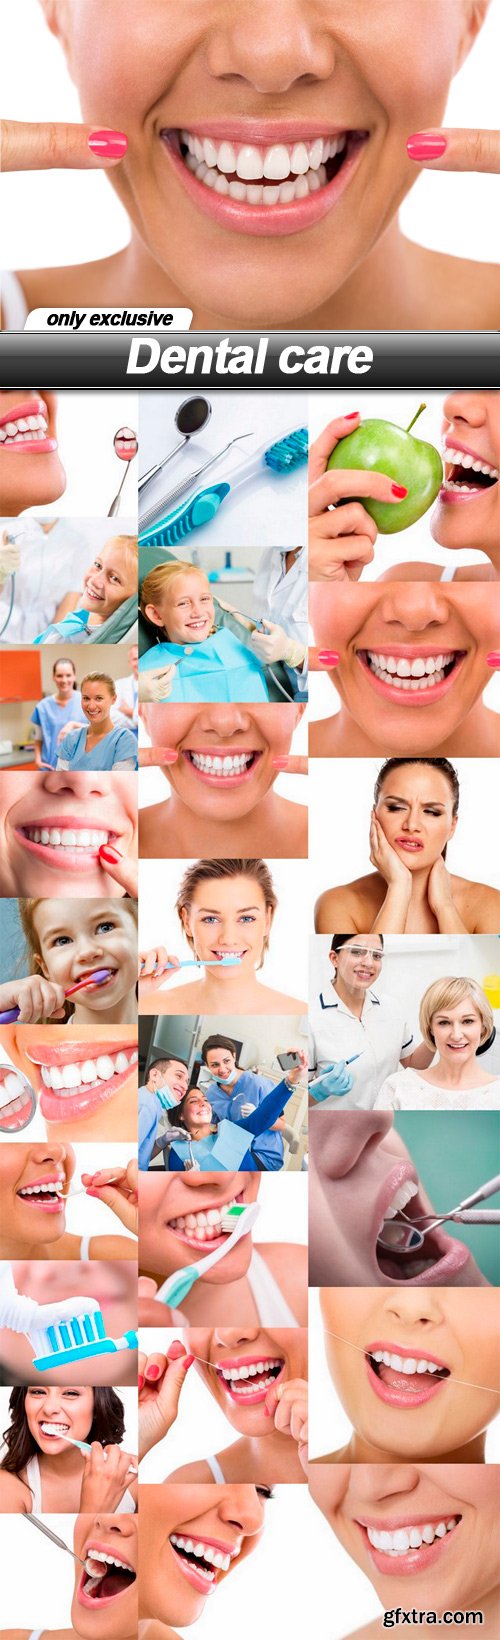 Dental care - 25 UHQ JPEG